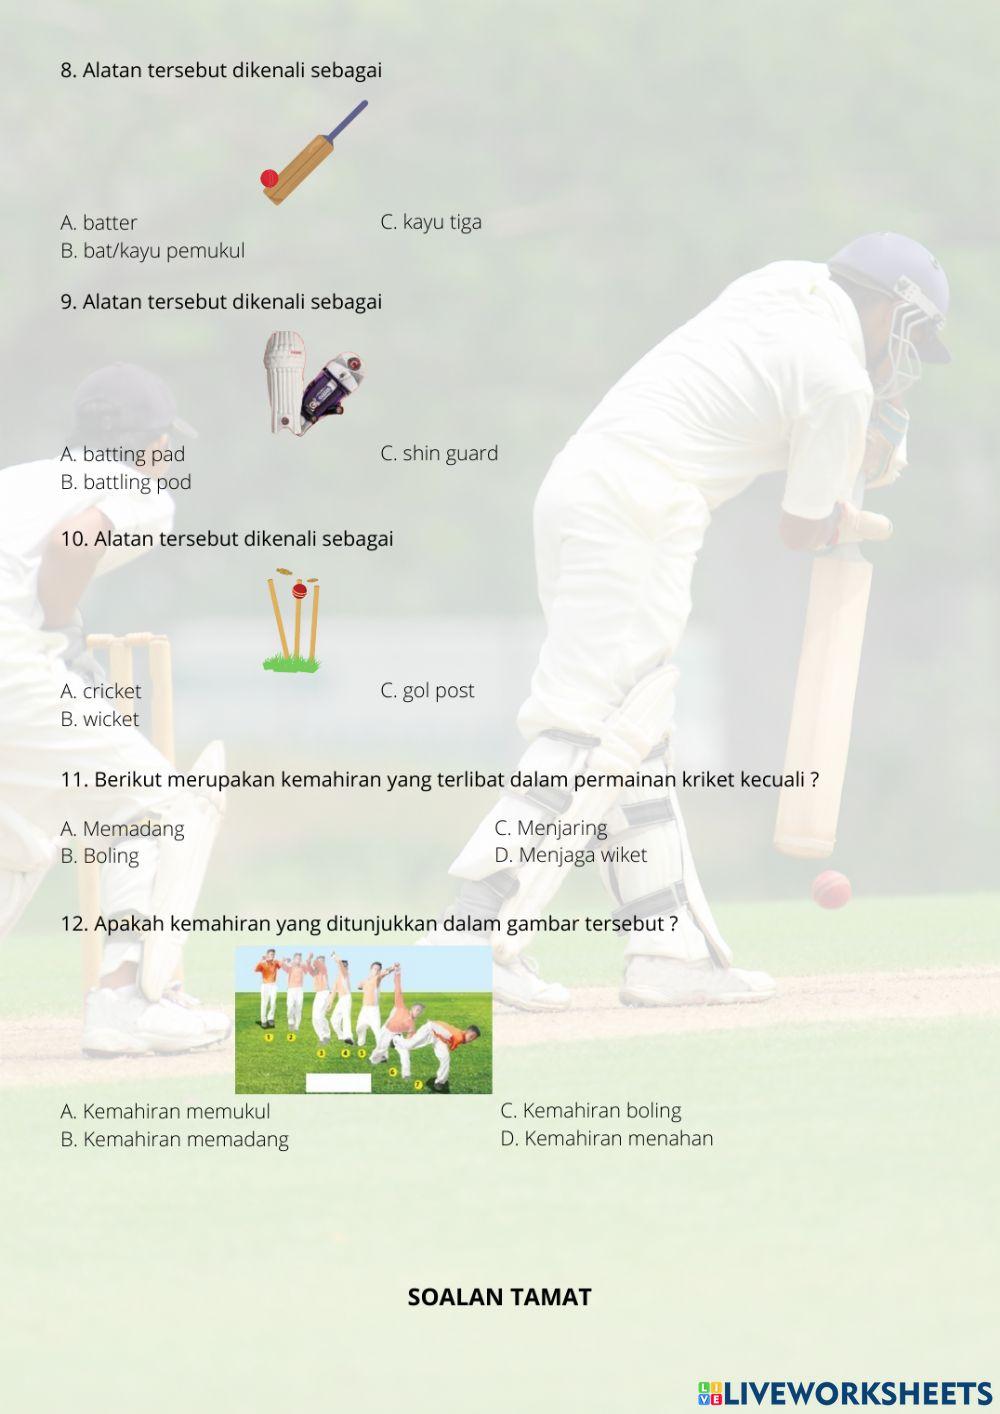 Kemahiran kriket